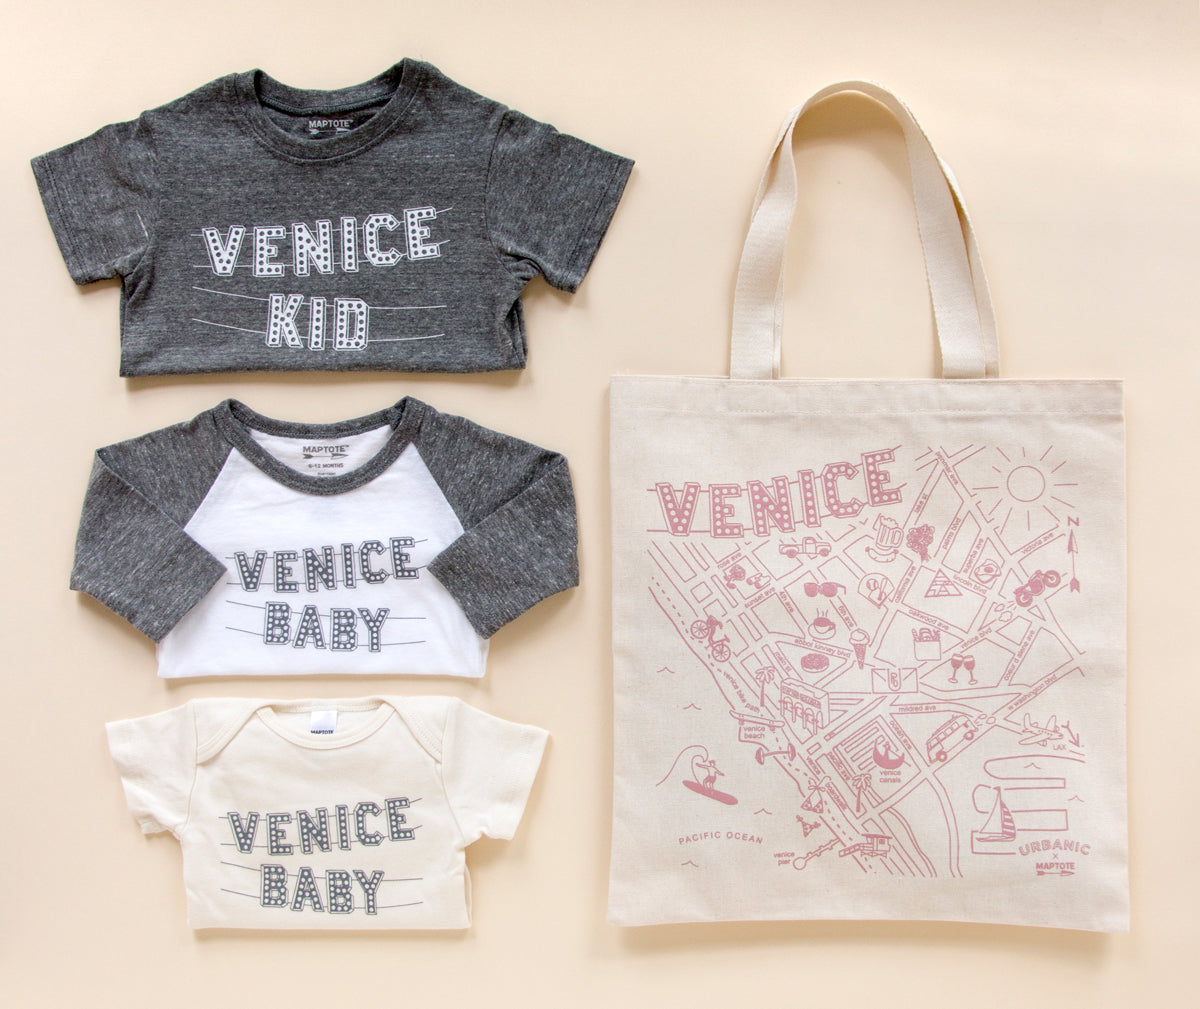 Custom Venice Collection for Urbanic!